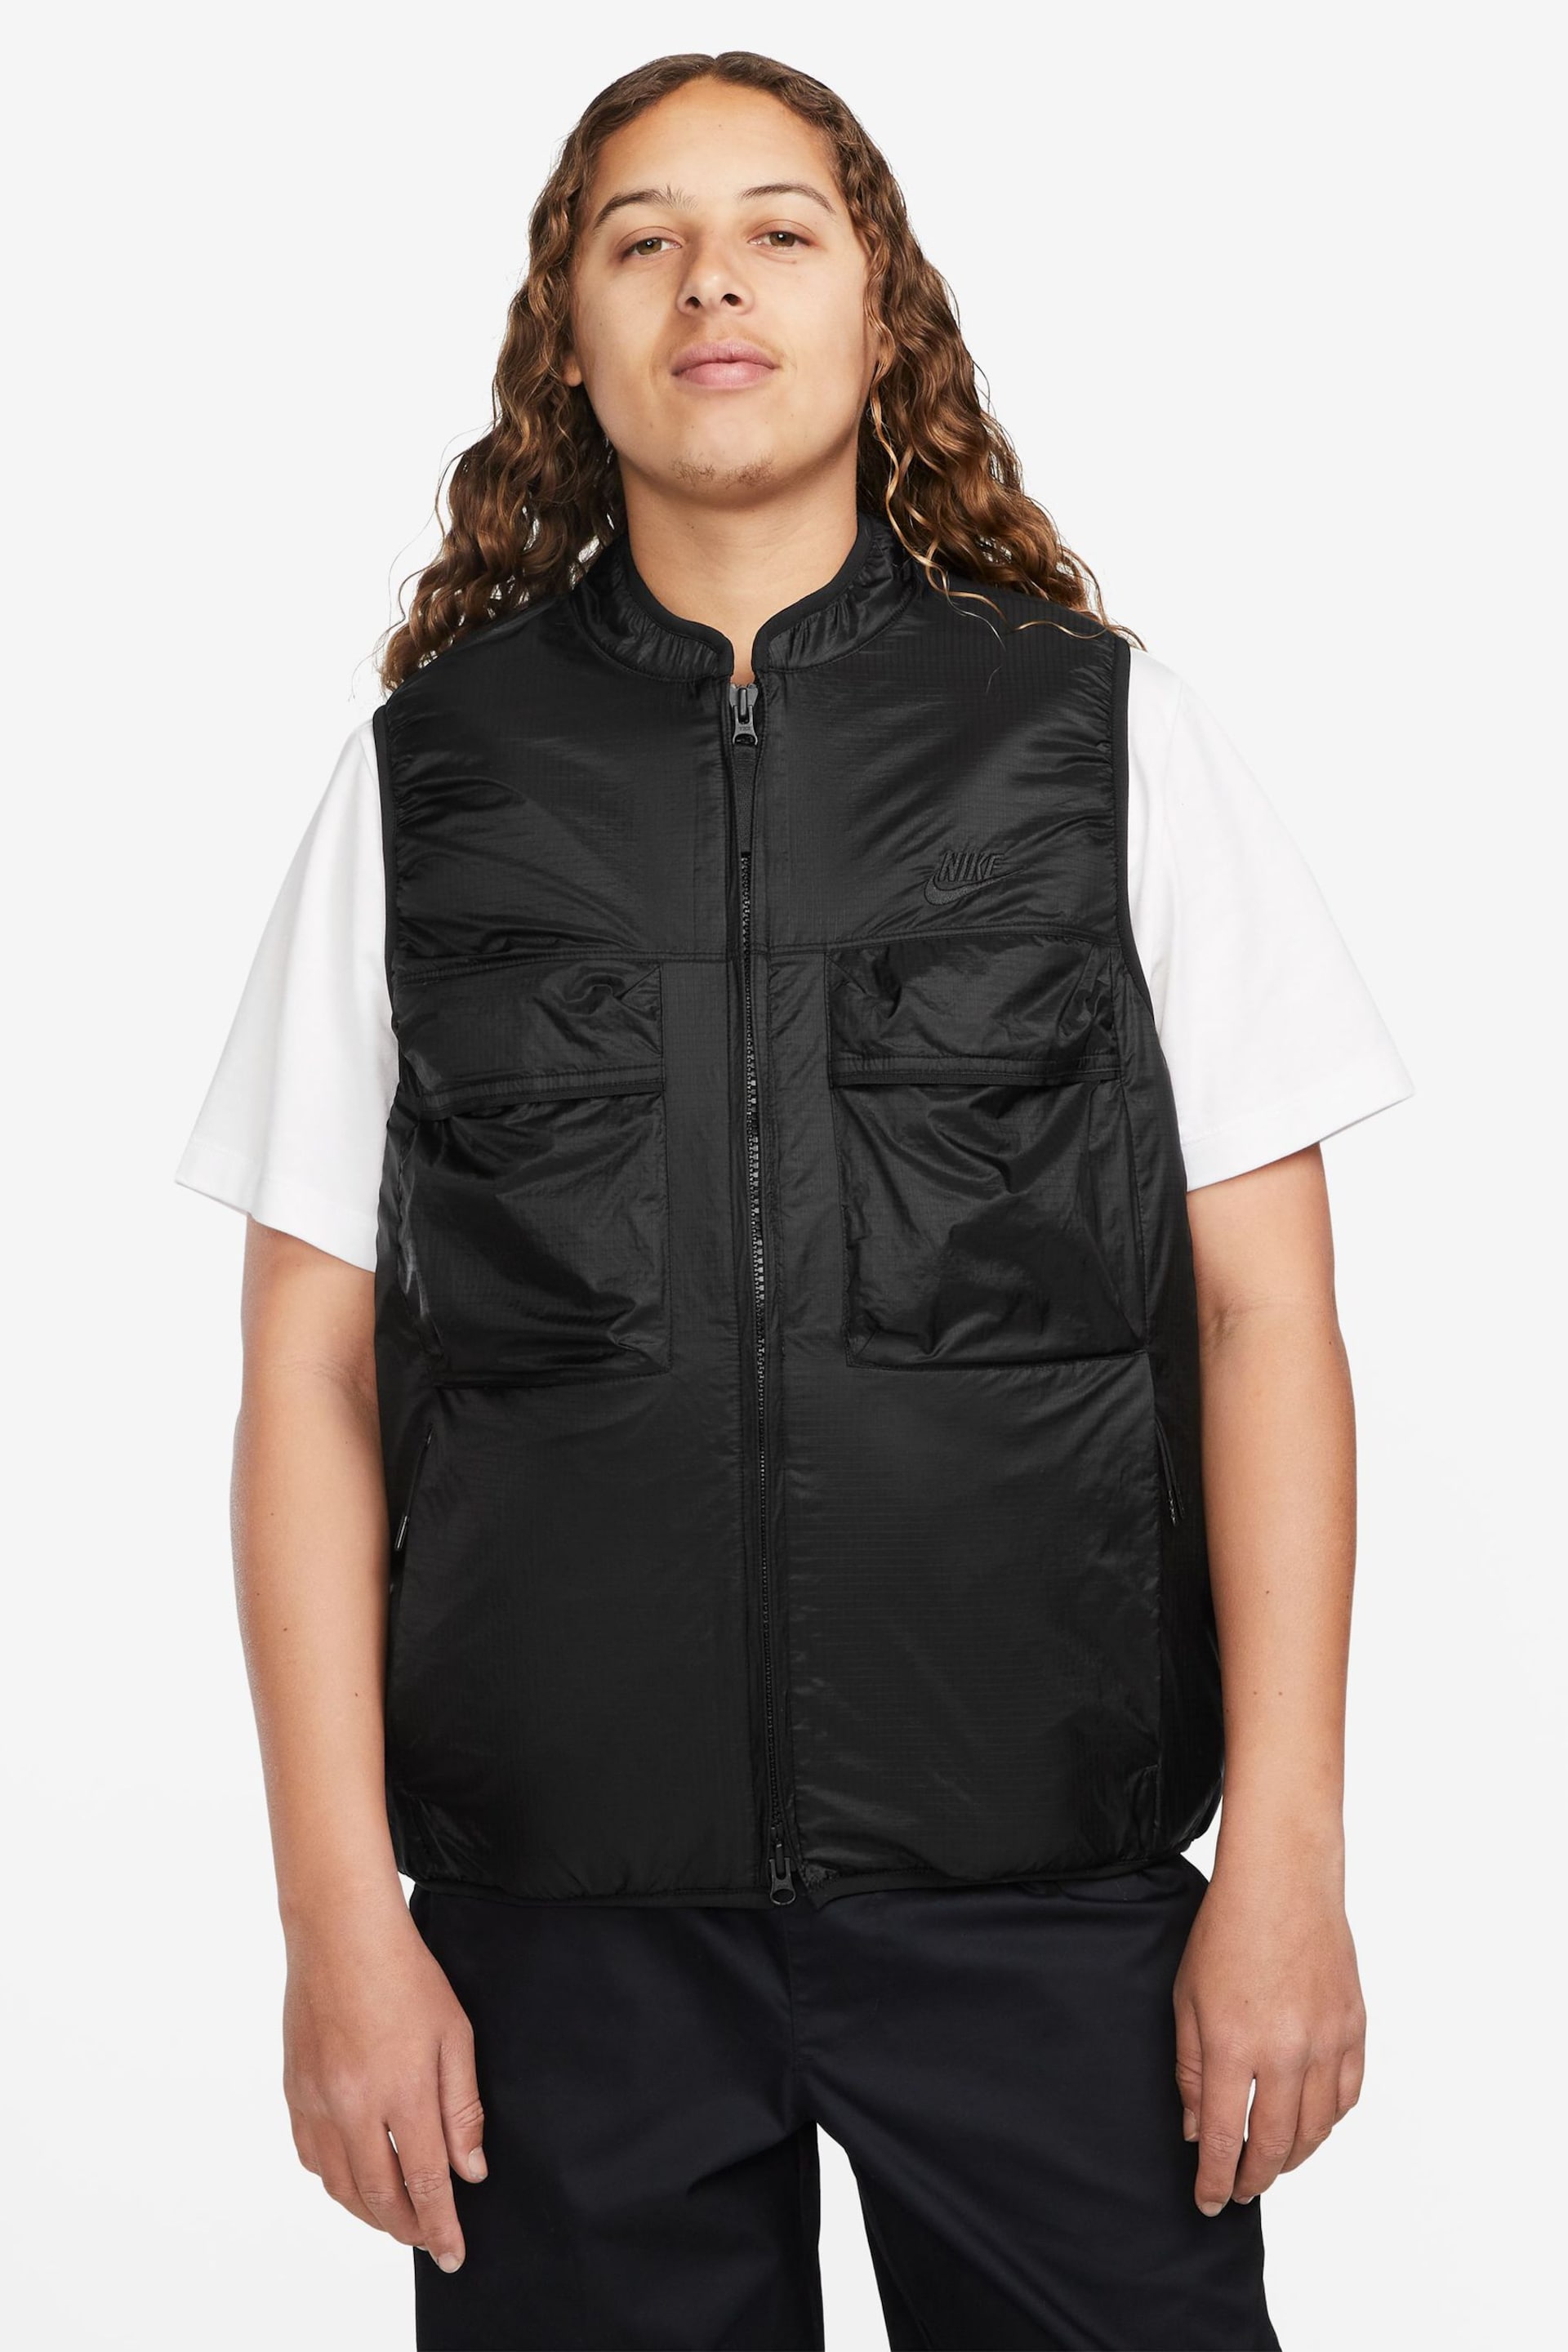 Nike Black Tech Fleece Utility Vest Gilet - Image 1 of 3